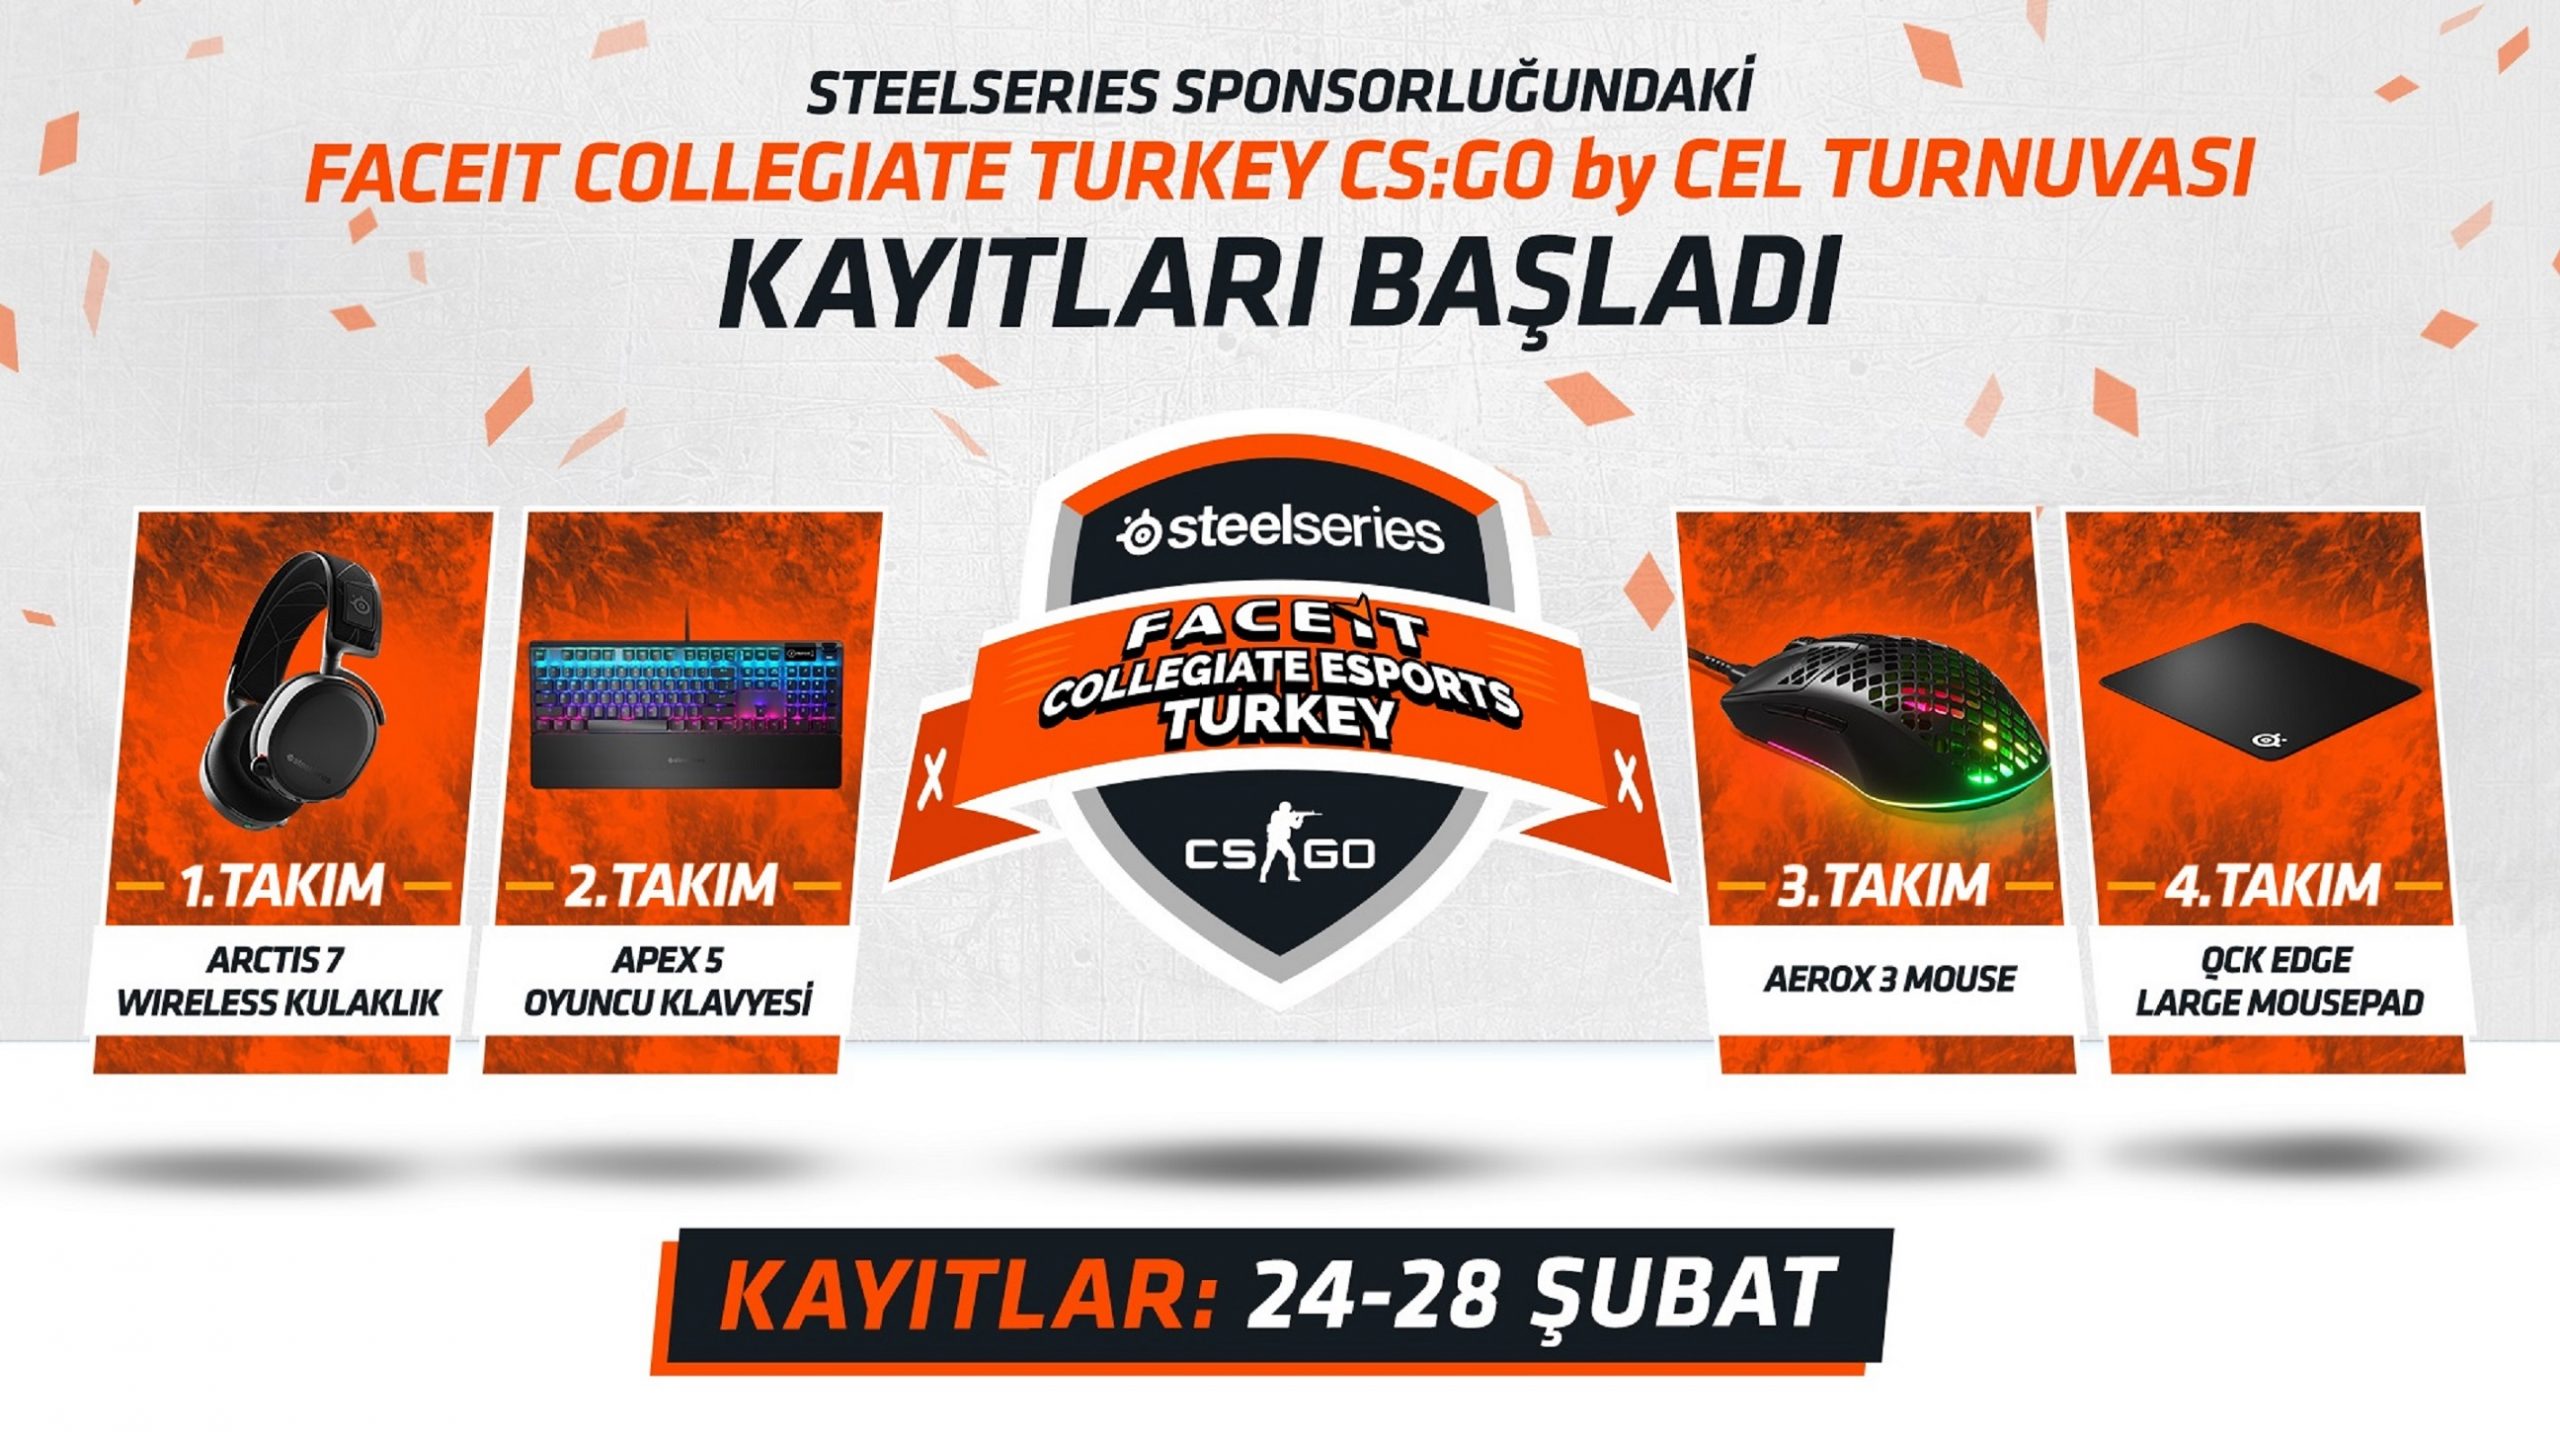 Faceit-Collegiate-Turkey-CS-GO-by-CEL-Turnuvasi-Kayitlari-Basladi-scaled.jpg